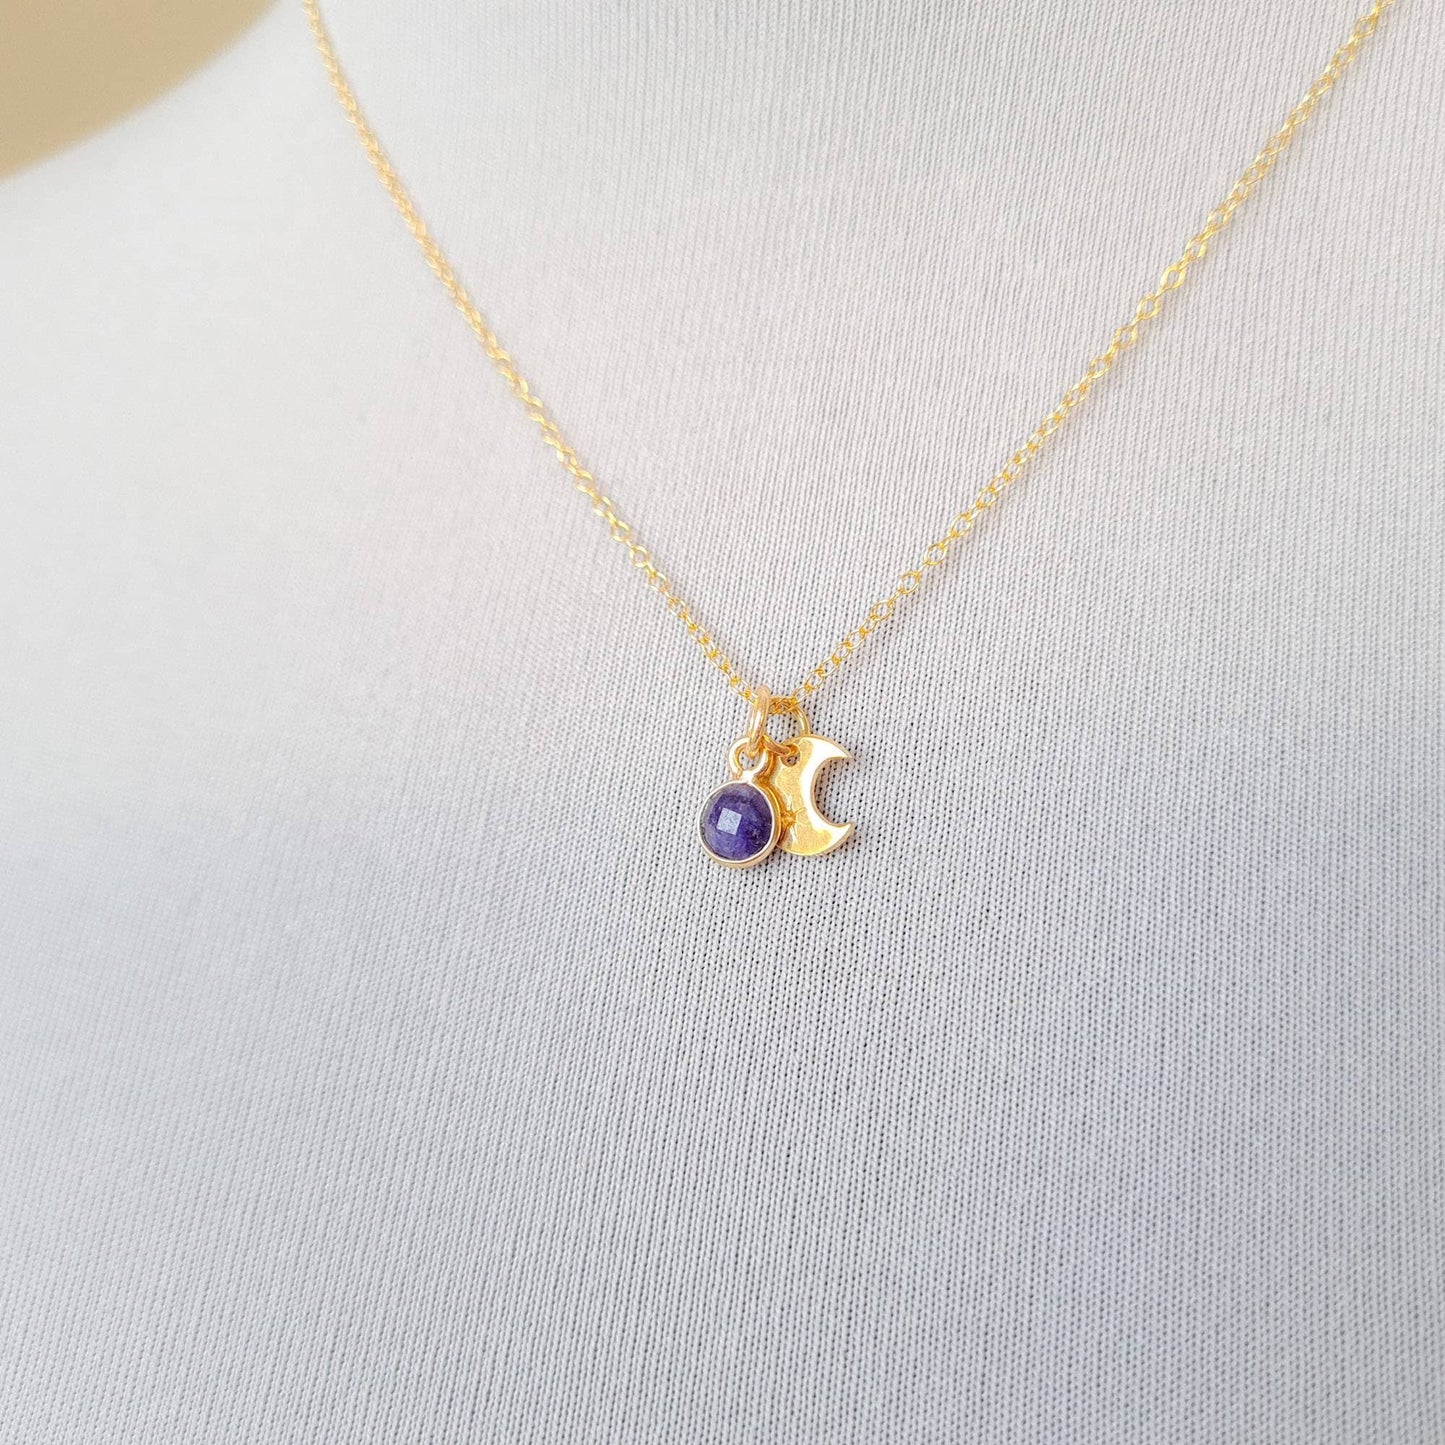 Sapphire pendant gold vermeil silver crescent moon necklace - celestial September birthstone jewellery